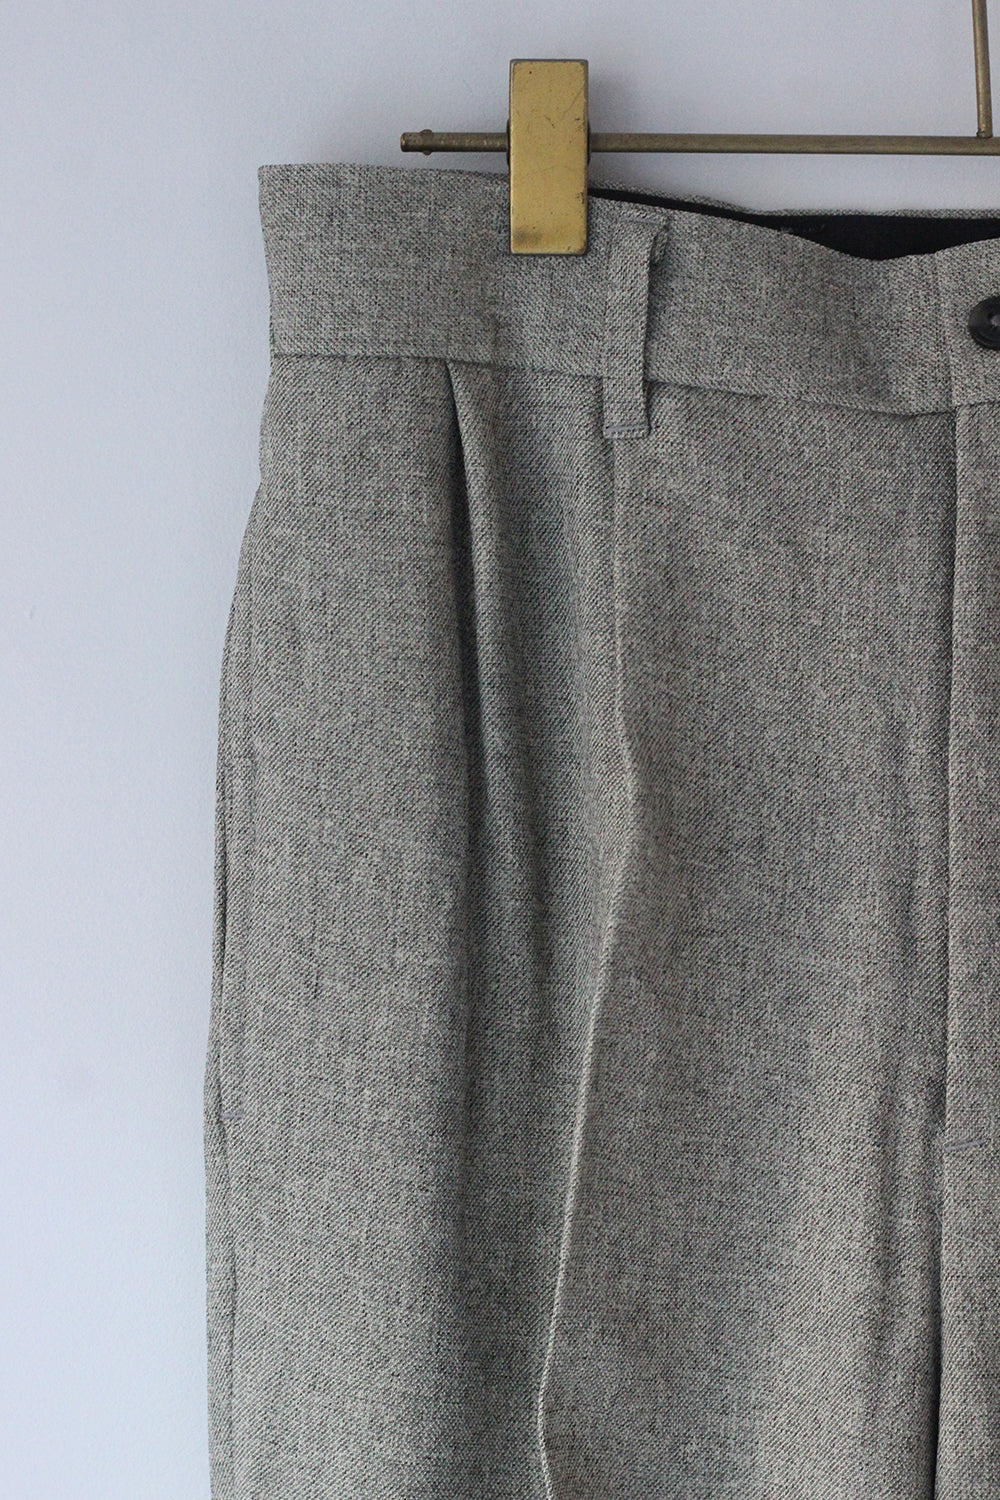 Needles "Tucked Trouser – PE/PU Stretch Twill" (gray)